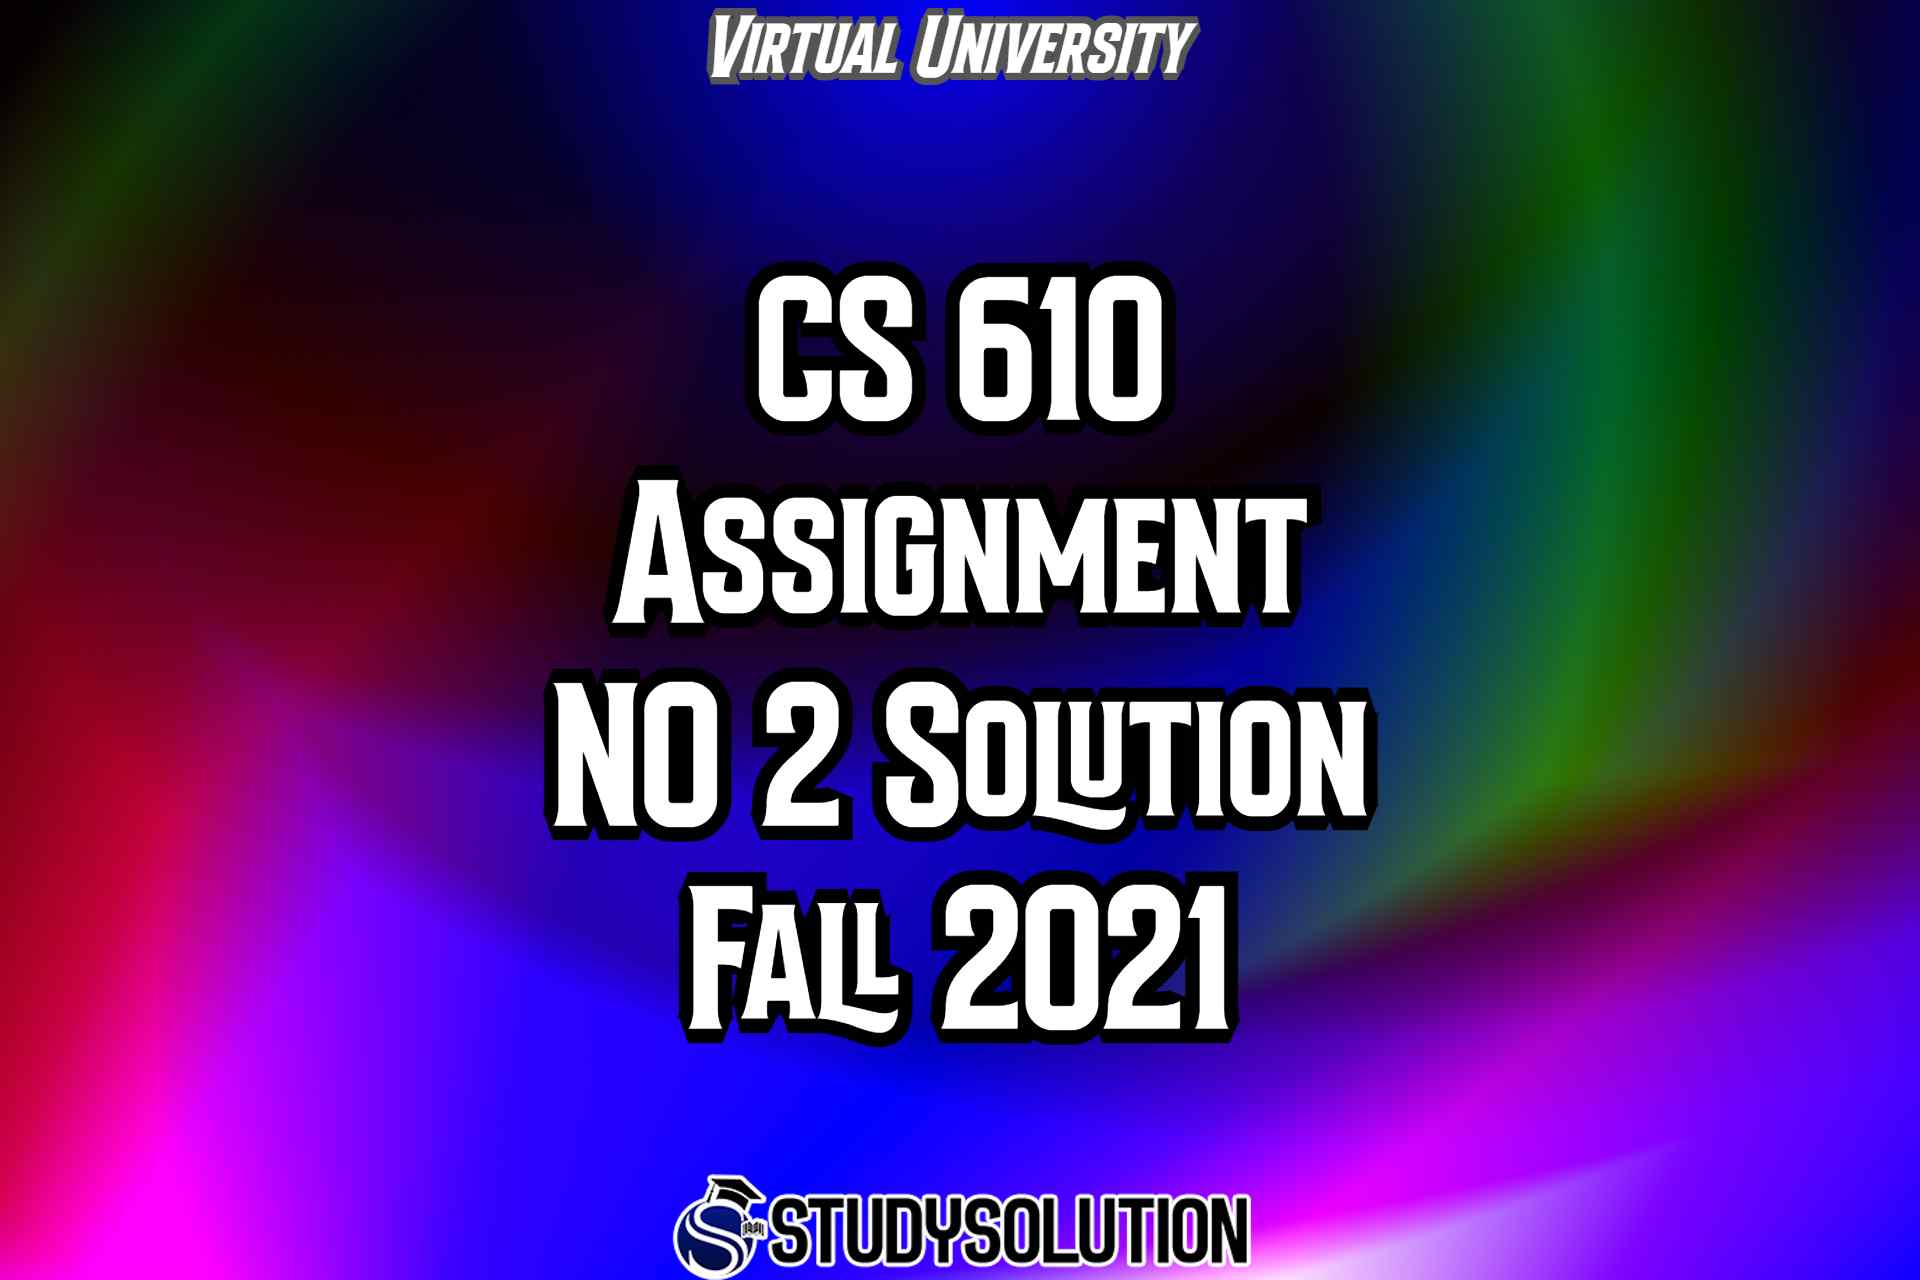 CS610 Assignment NO 2 Solution Fall 2021